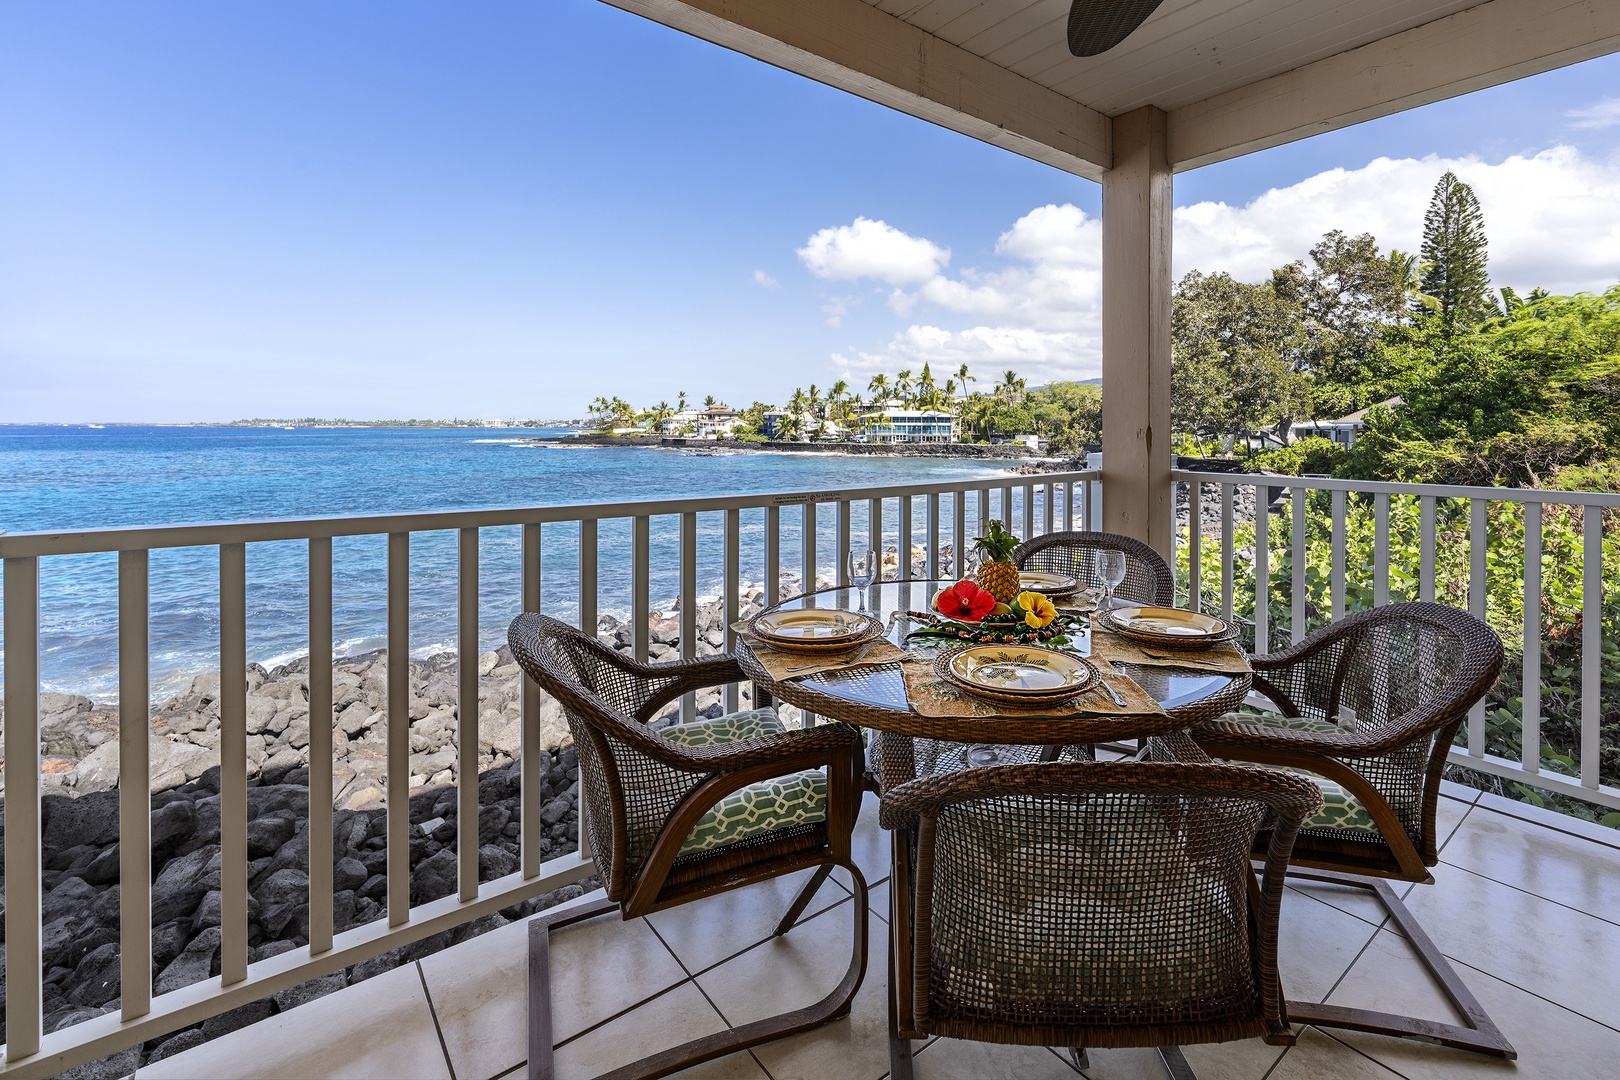 Kailua Kona Vacation Rentals, Sea Village 1105 - Outdoor dining for 4!